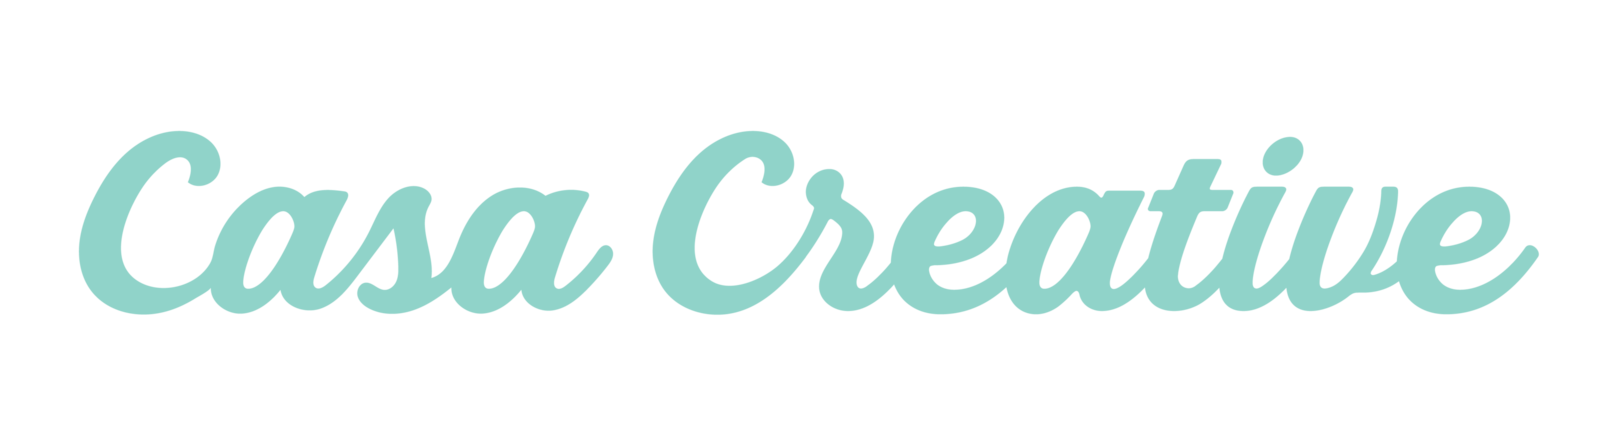 Casa Creative simplified blue logo